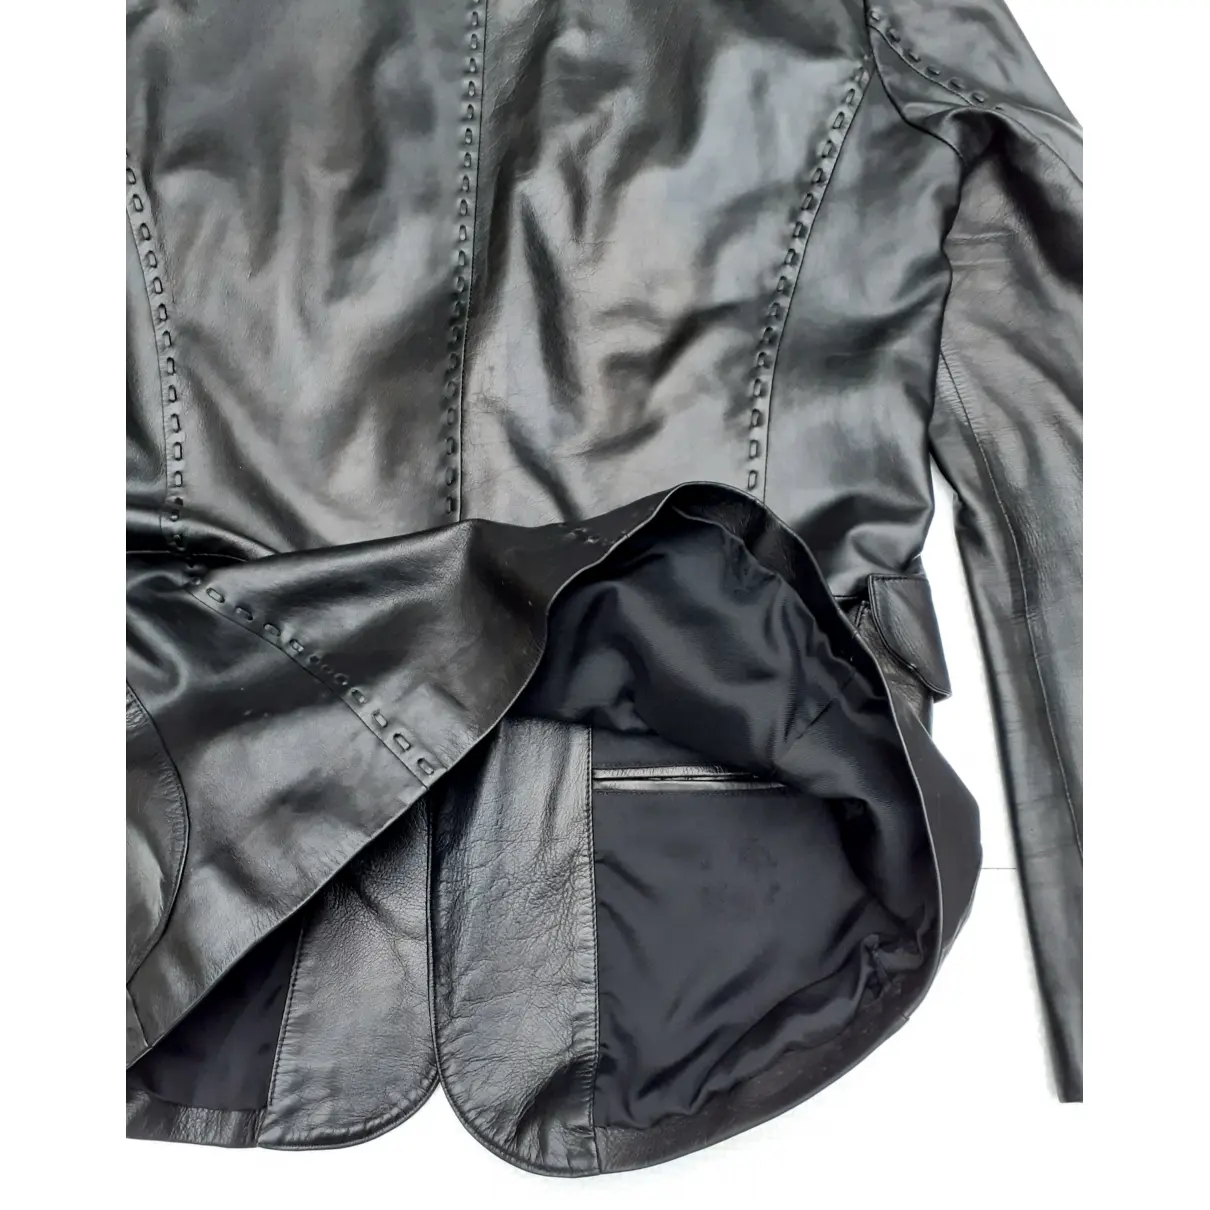 Buy Roberto Cavalli Leather vest online